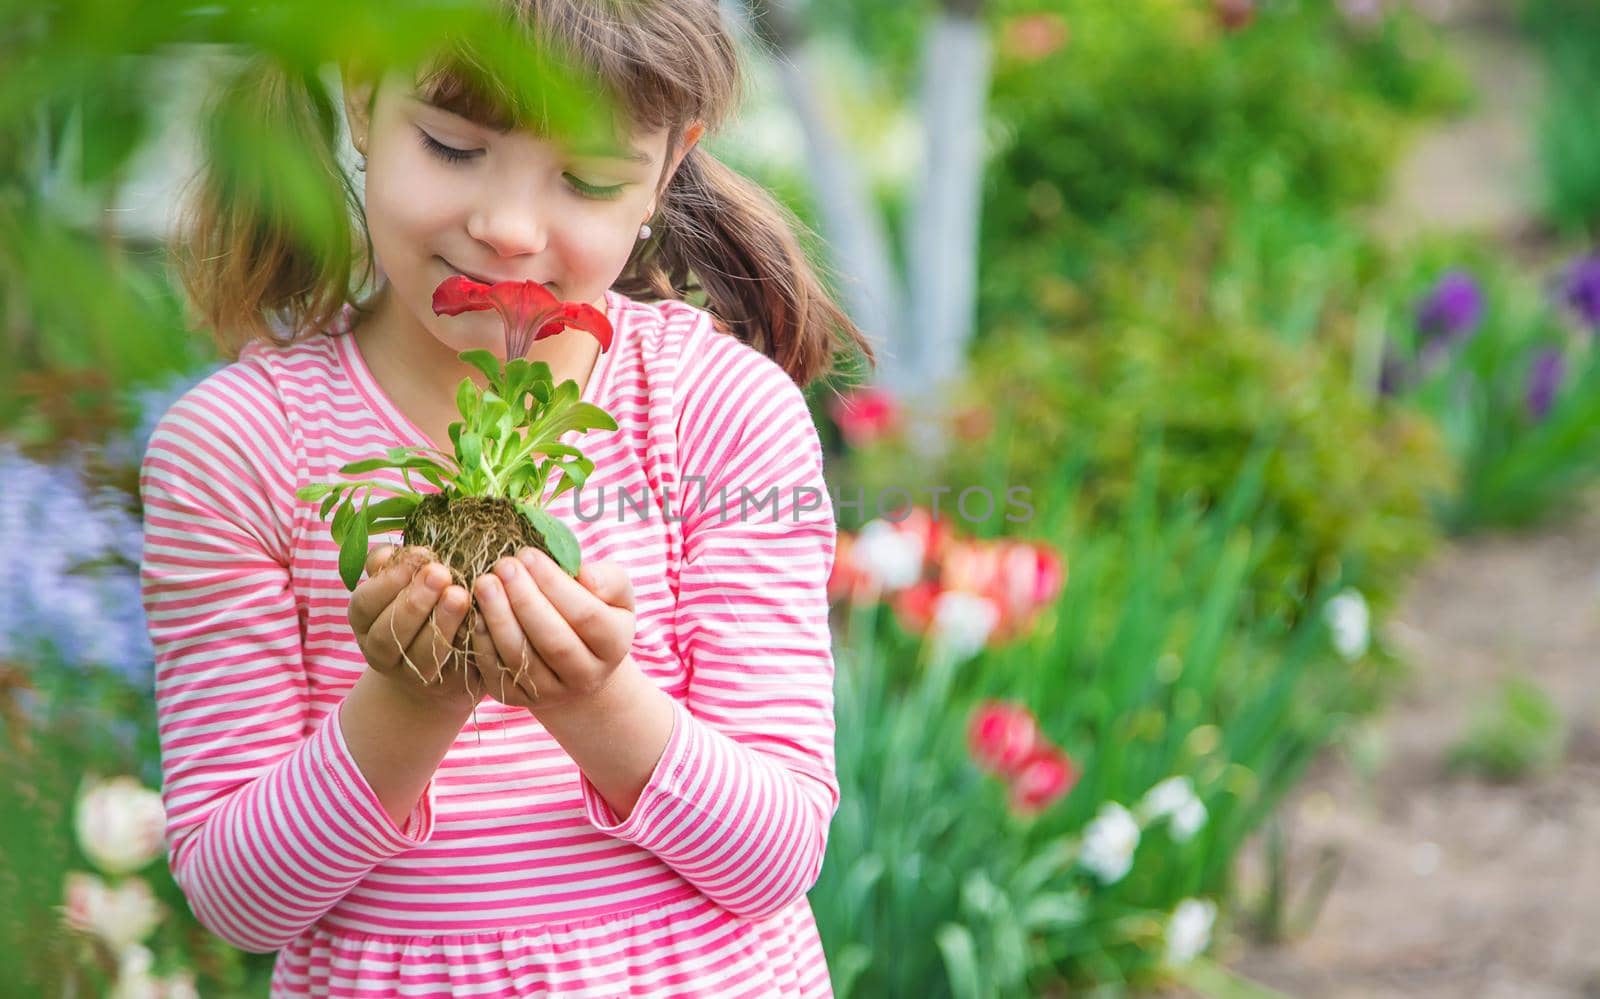 A child plants a flower garden. Selective focus. by yanadjana